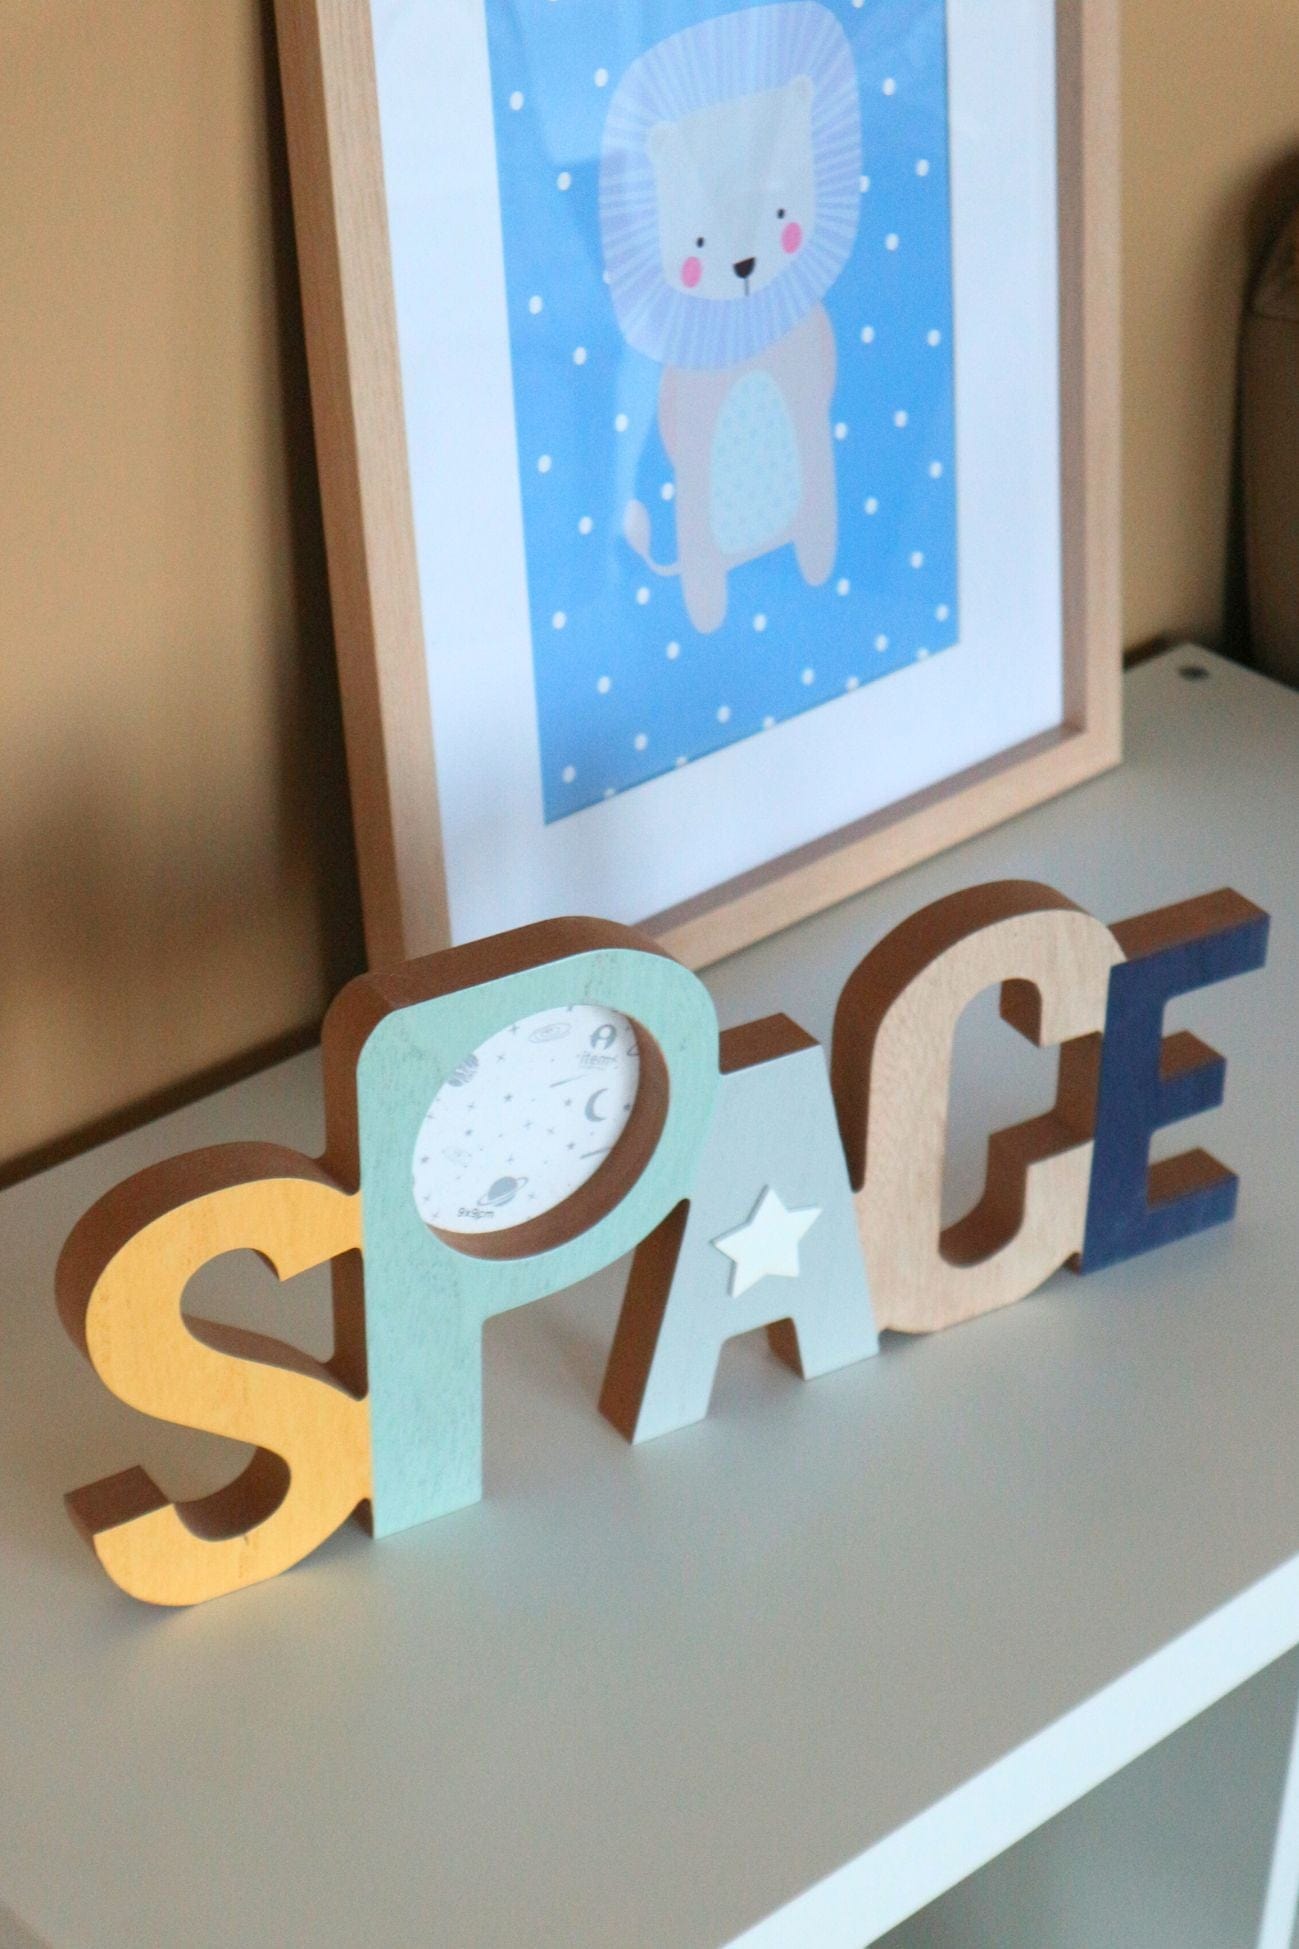 Item International Space Space - Portafoto decorativo in legno per bambini | Item International